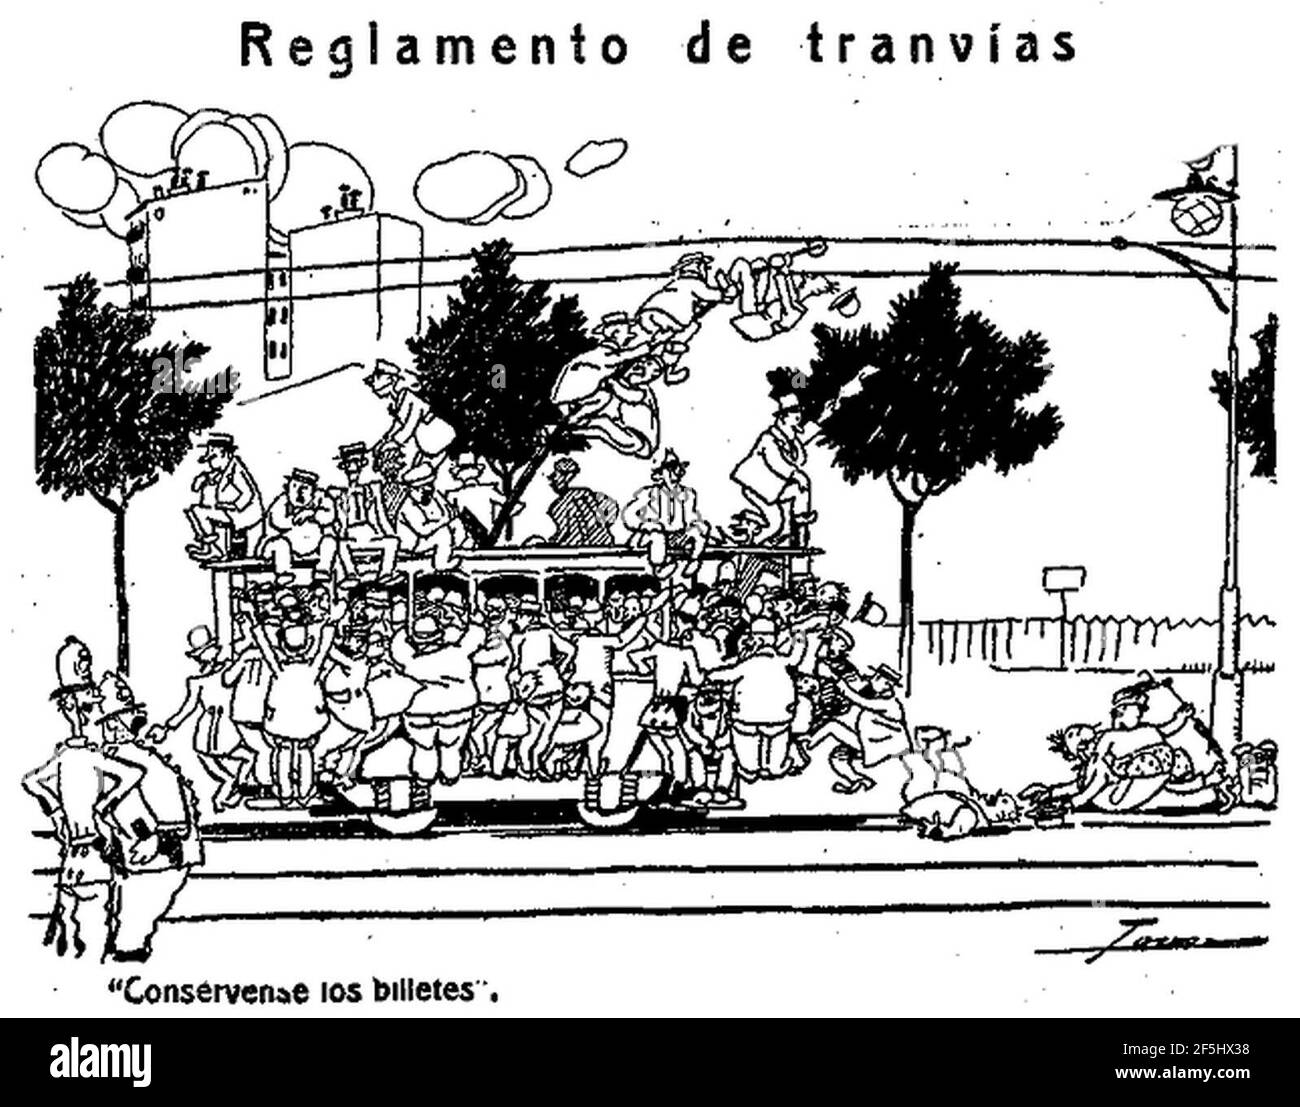 Reglamento de tranvías, de Tovar. Foto de stock